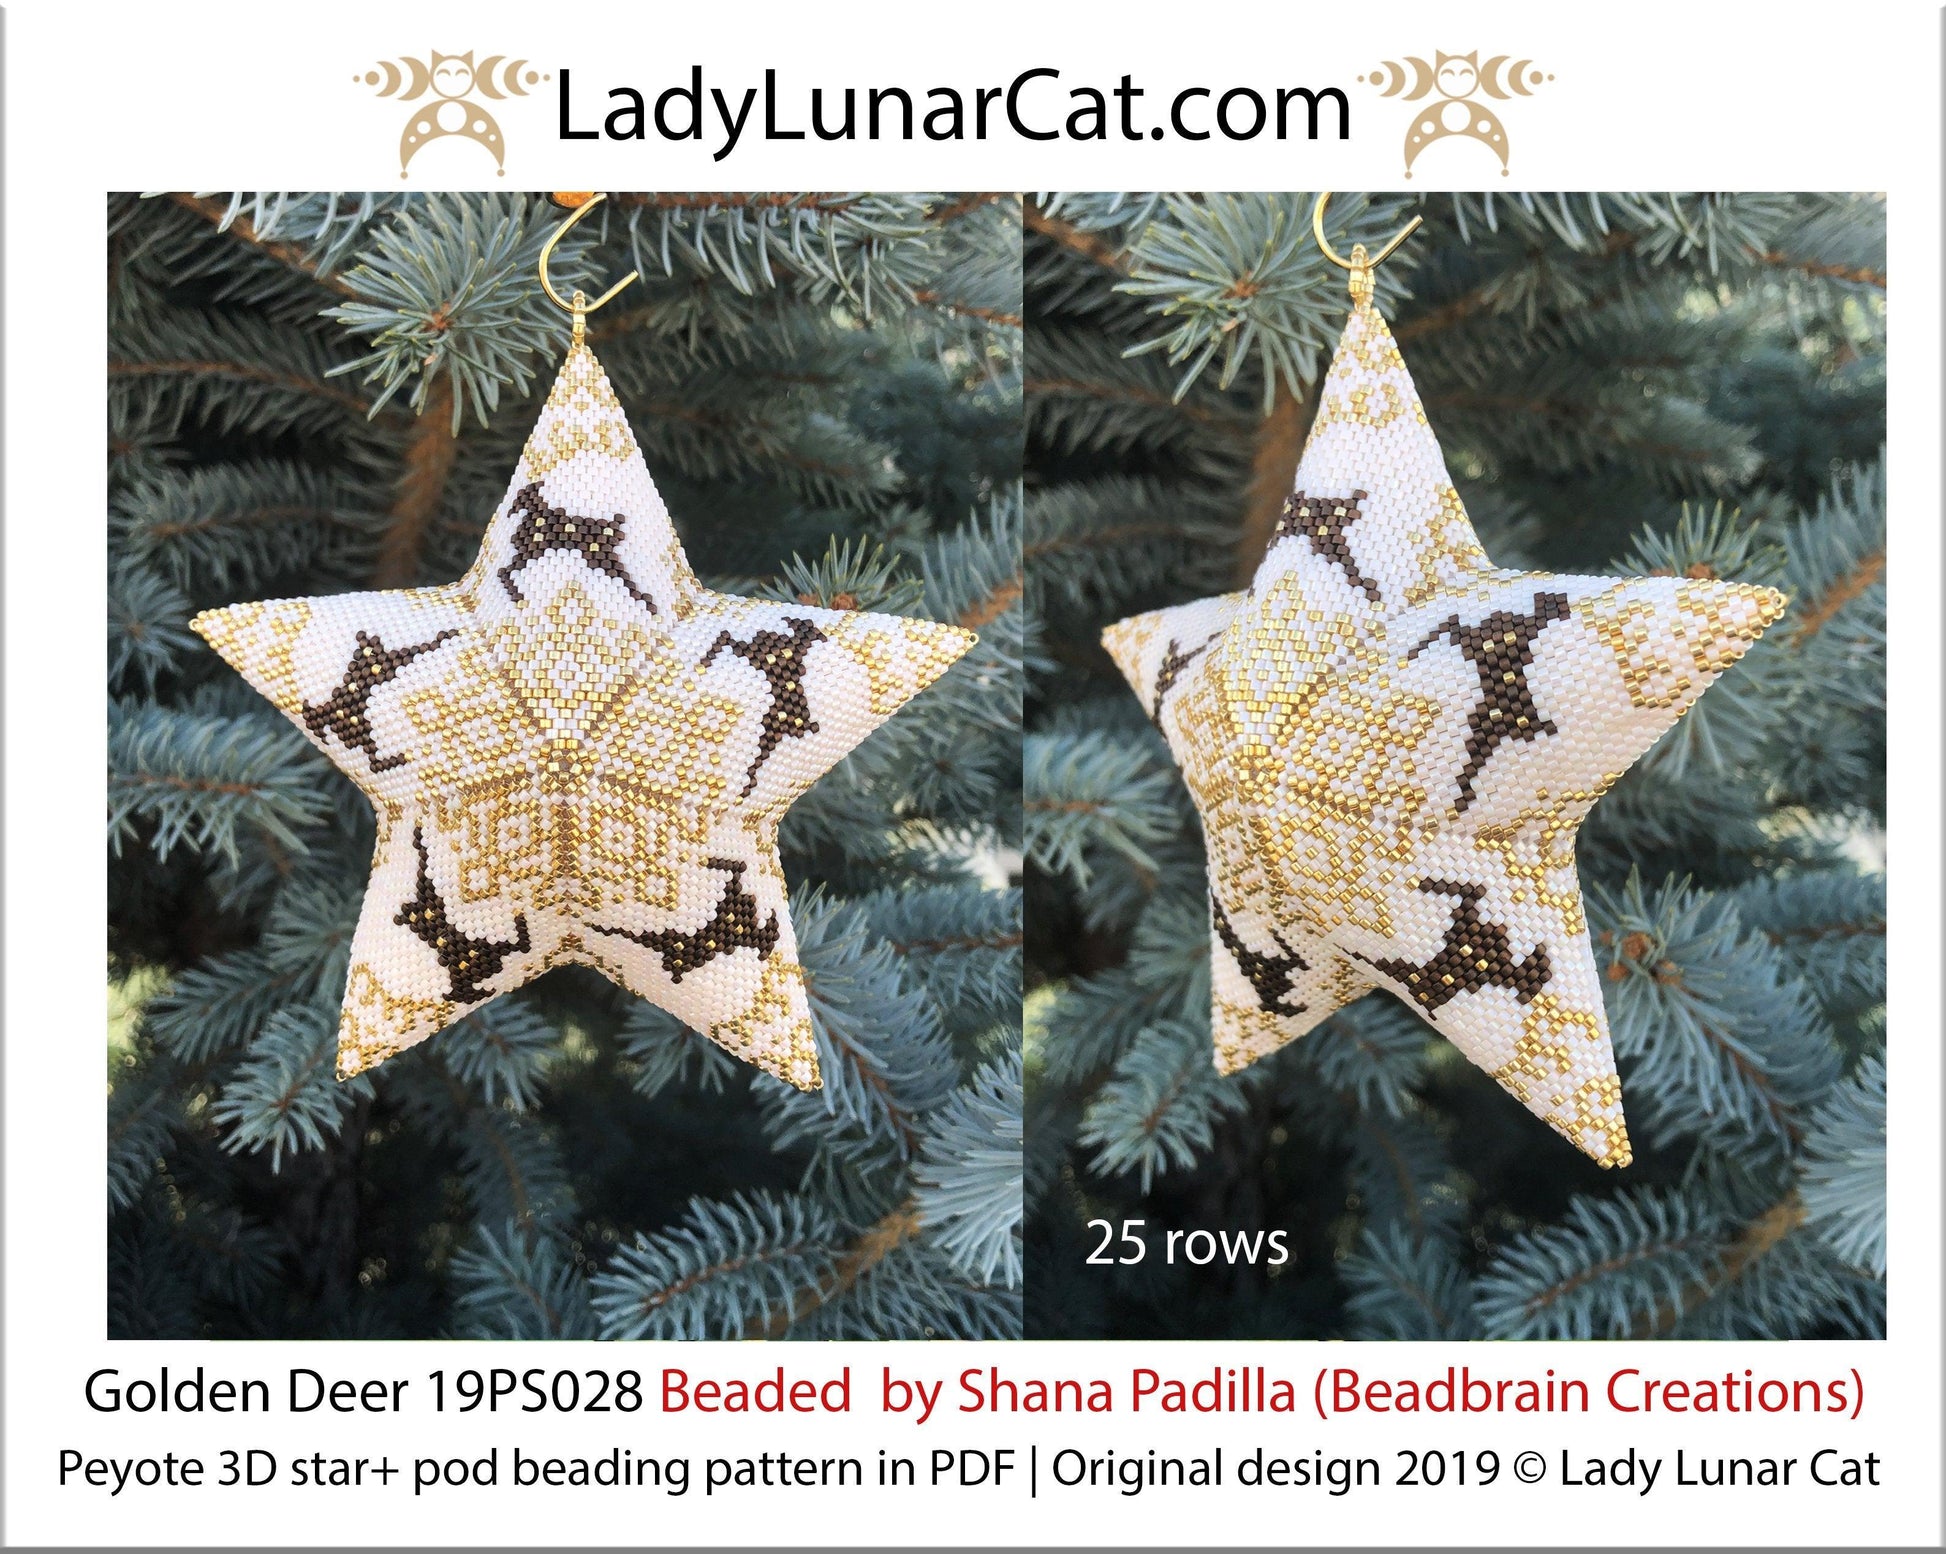 Peyote star patterns for beading and peyote pod patterns Golden deer 19PS028 LadyLunarCat